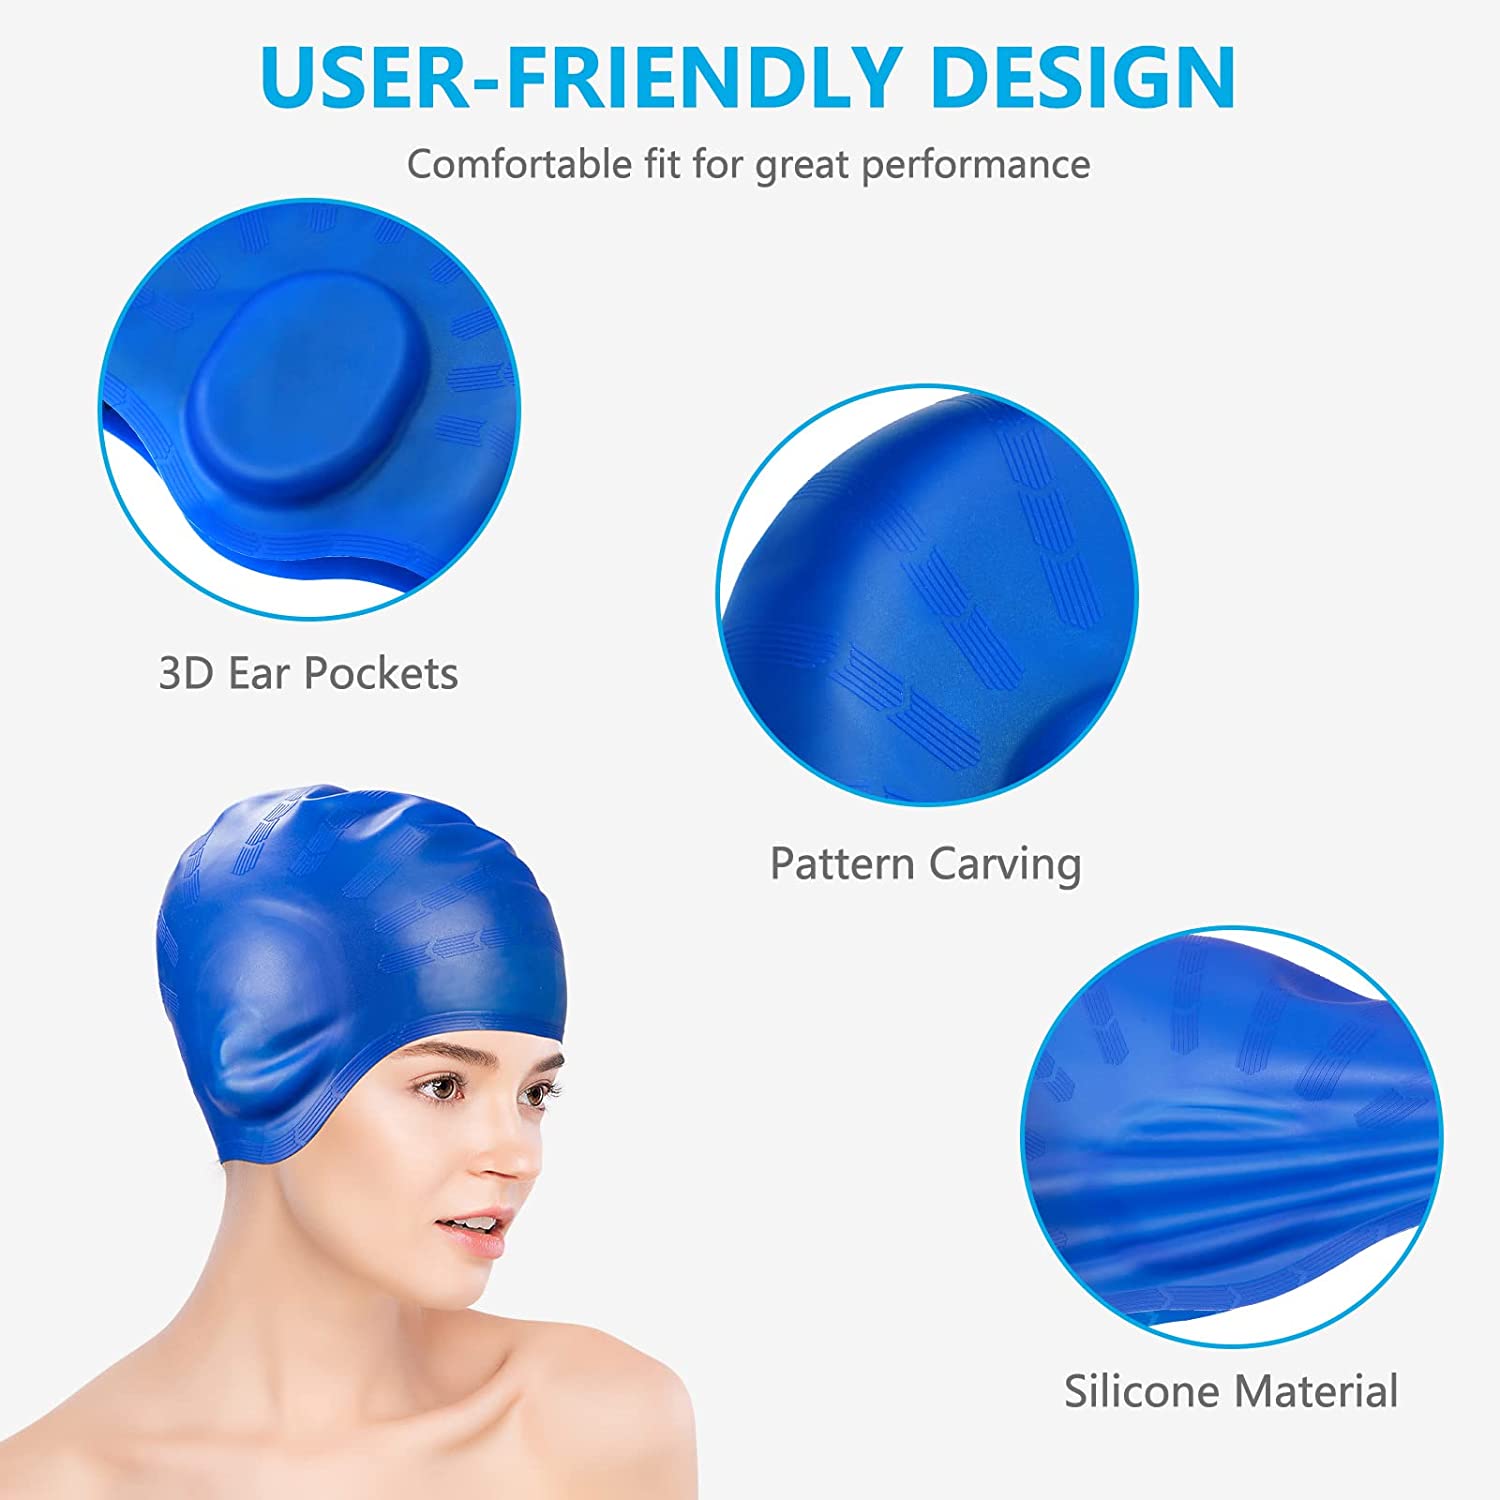 Swim Caps Cover Ears (2 Pack) Unisex Swim Caps Durable Flexible